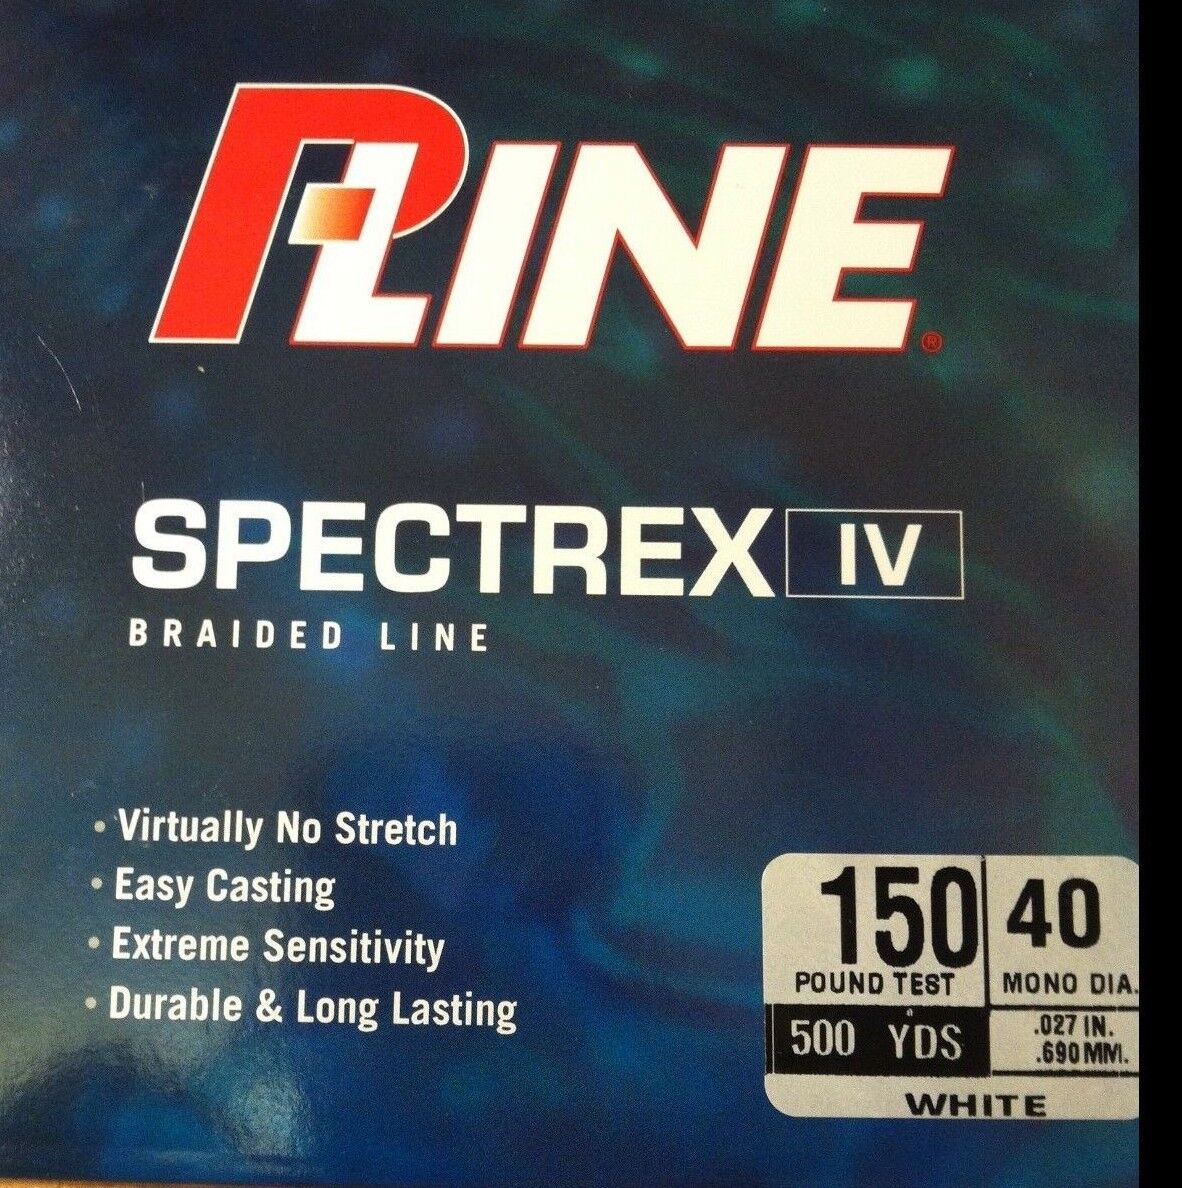 P-Line Spectrex IV Braid Fishing Spool (500-Yard 150-Pound White) Grouper  Tuna